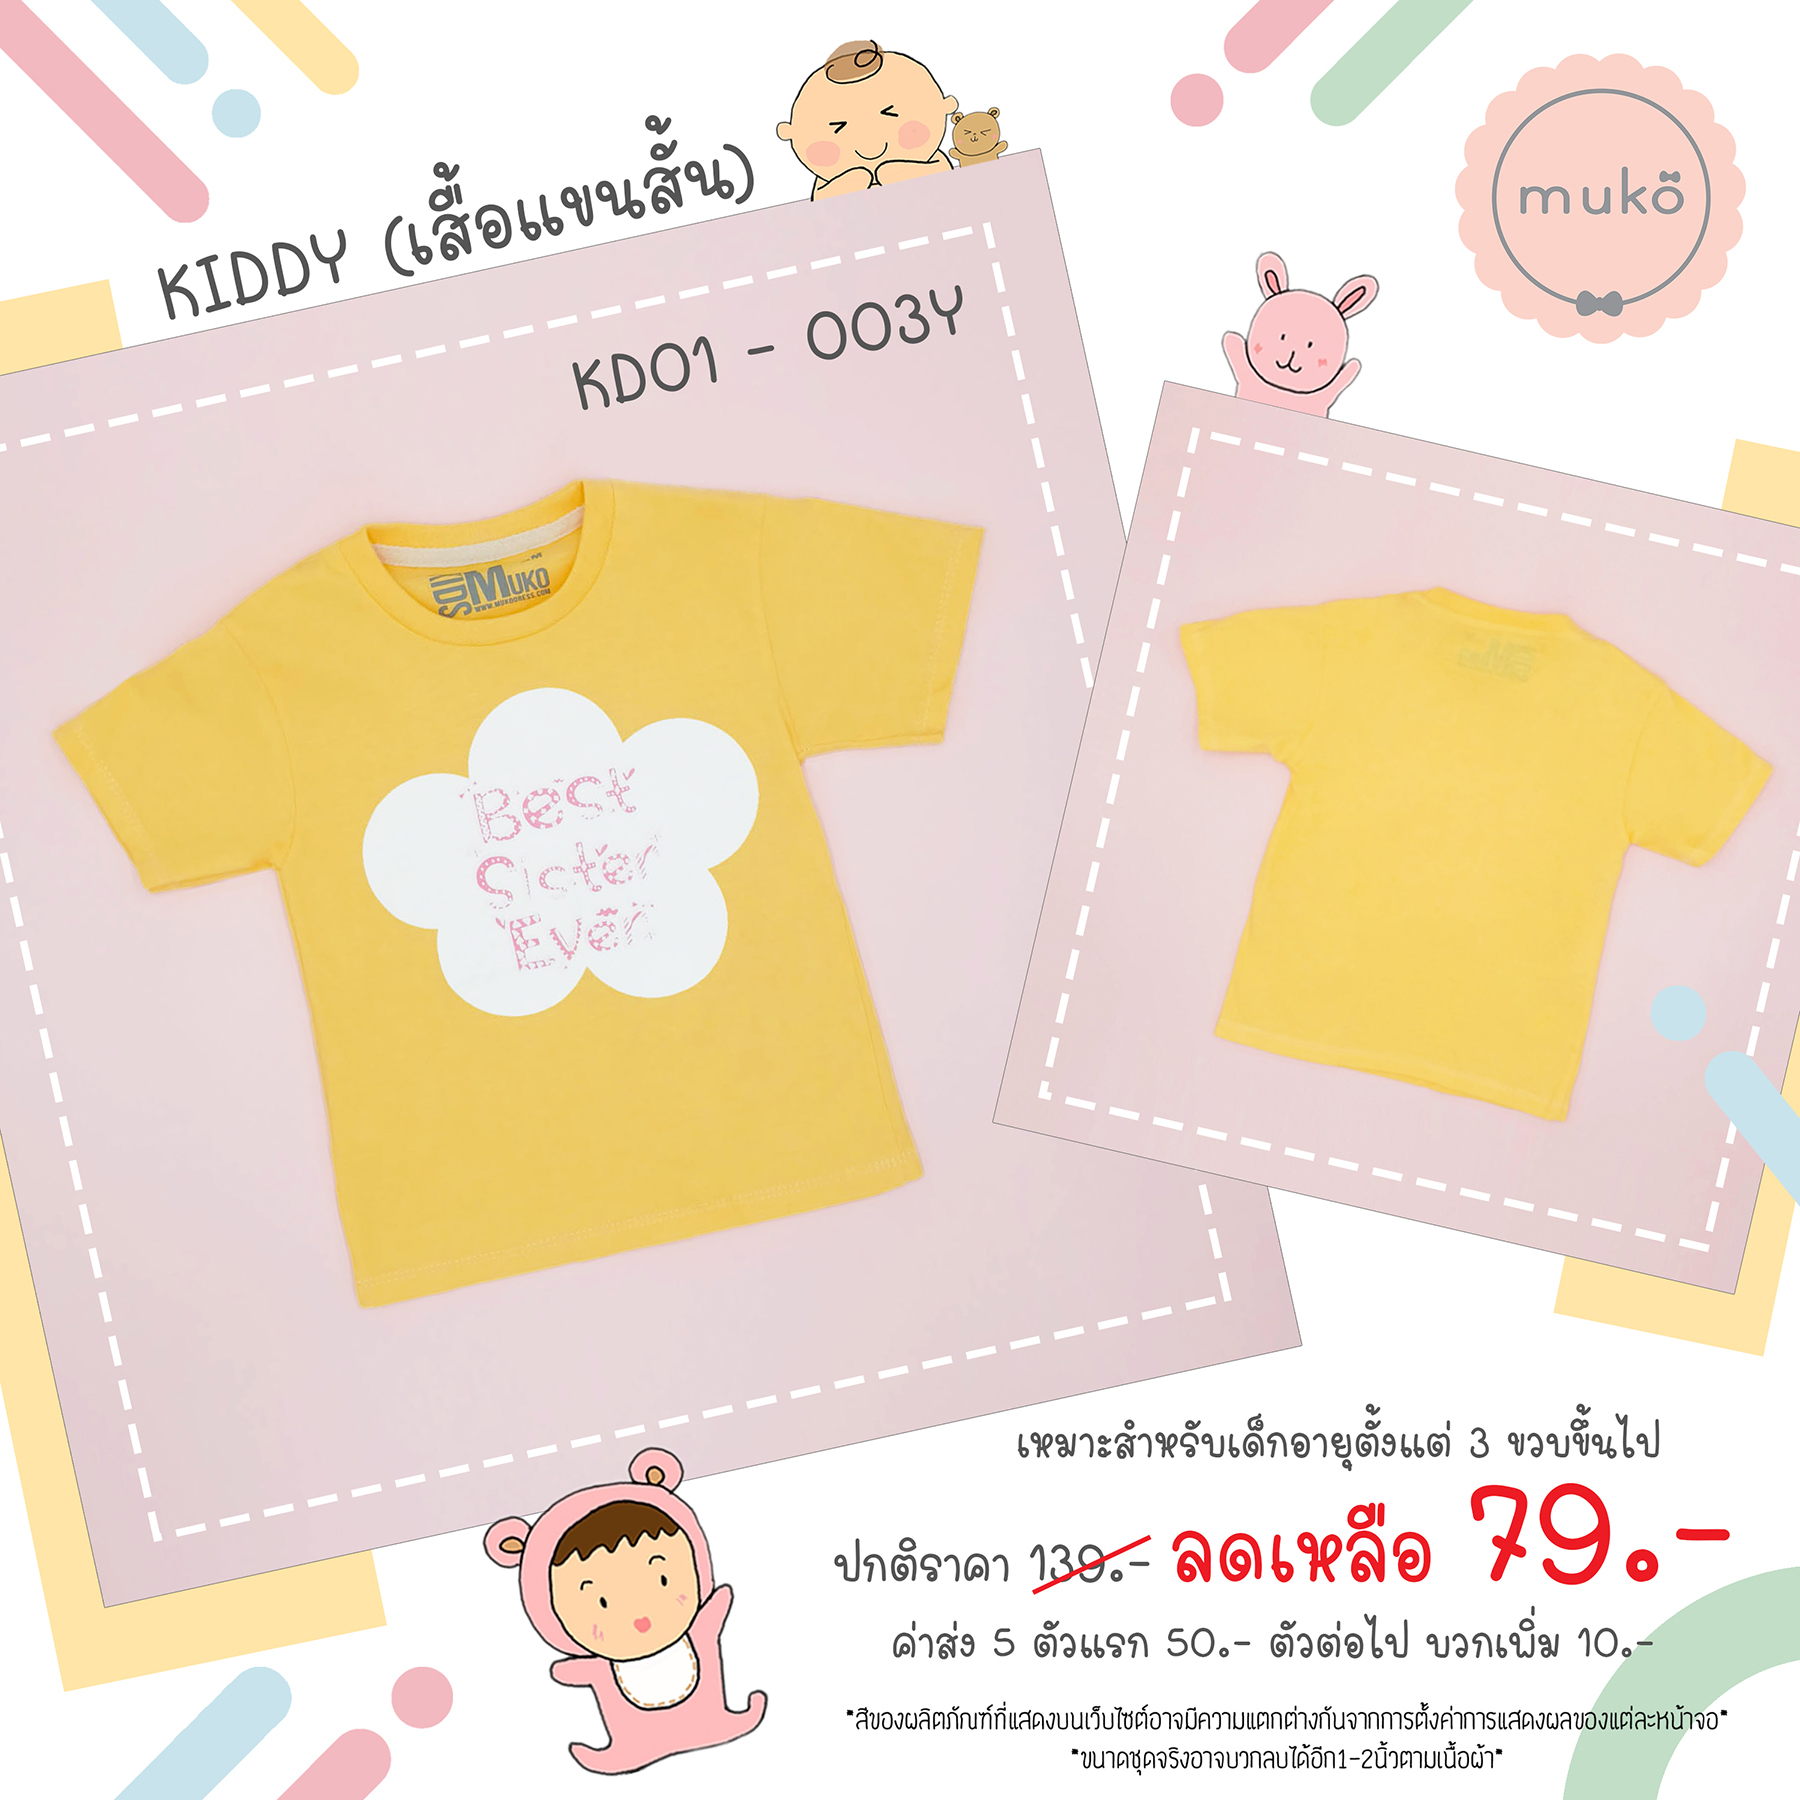 Muko Kiddy เสื้อเด็กเล็ก (แขนสั้น) Size M KD01-003Y M ลาย Best sister even สีเหลือง